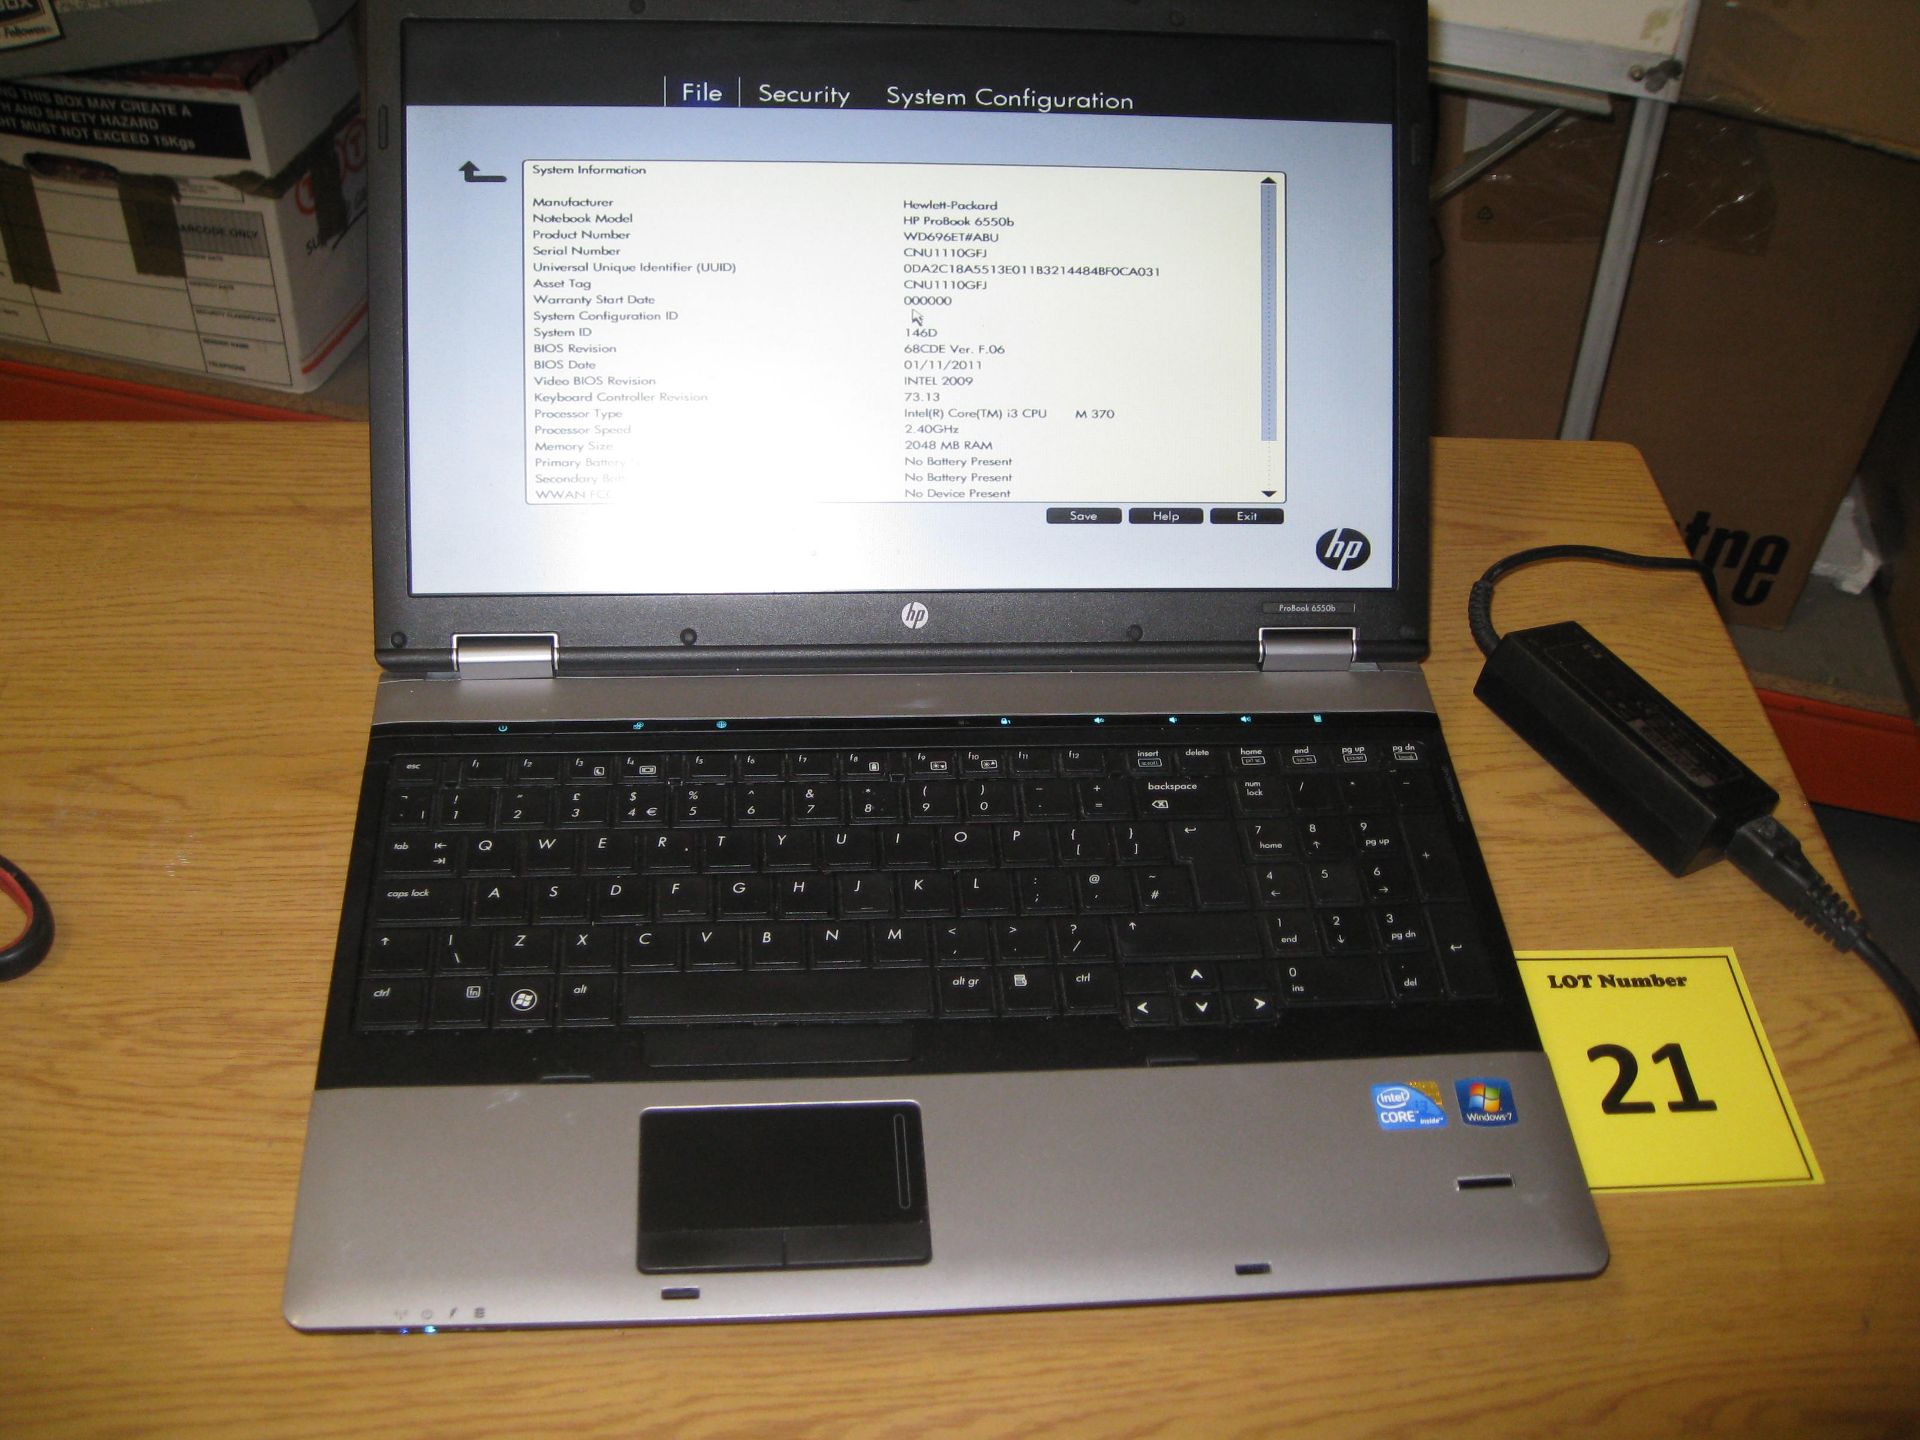 HP Probook 6550b Laptop, Core-i3 2.40Ghz, 2Gb Ram/320GB HDD, dvdrw, psu - Win 7 Pro COA